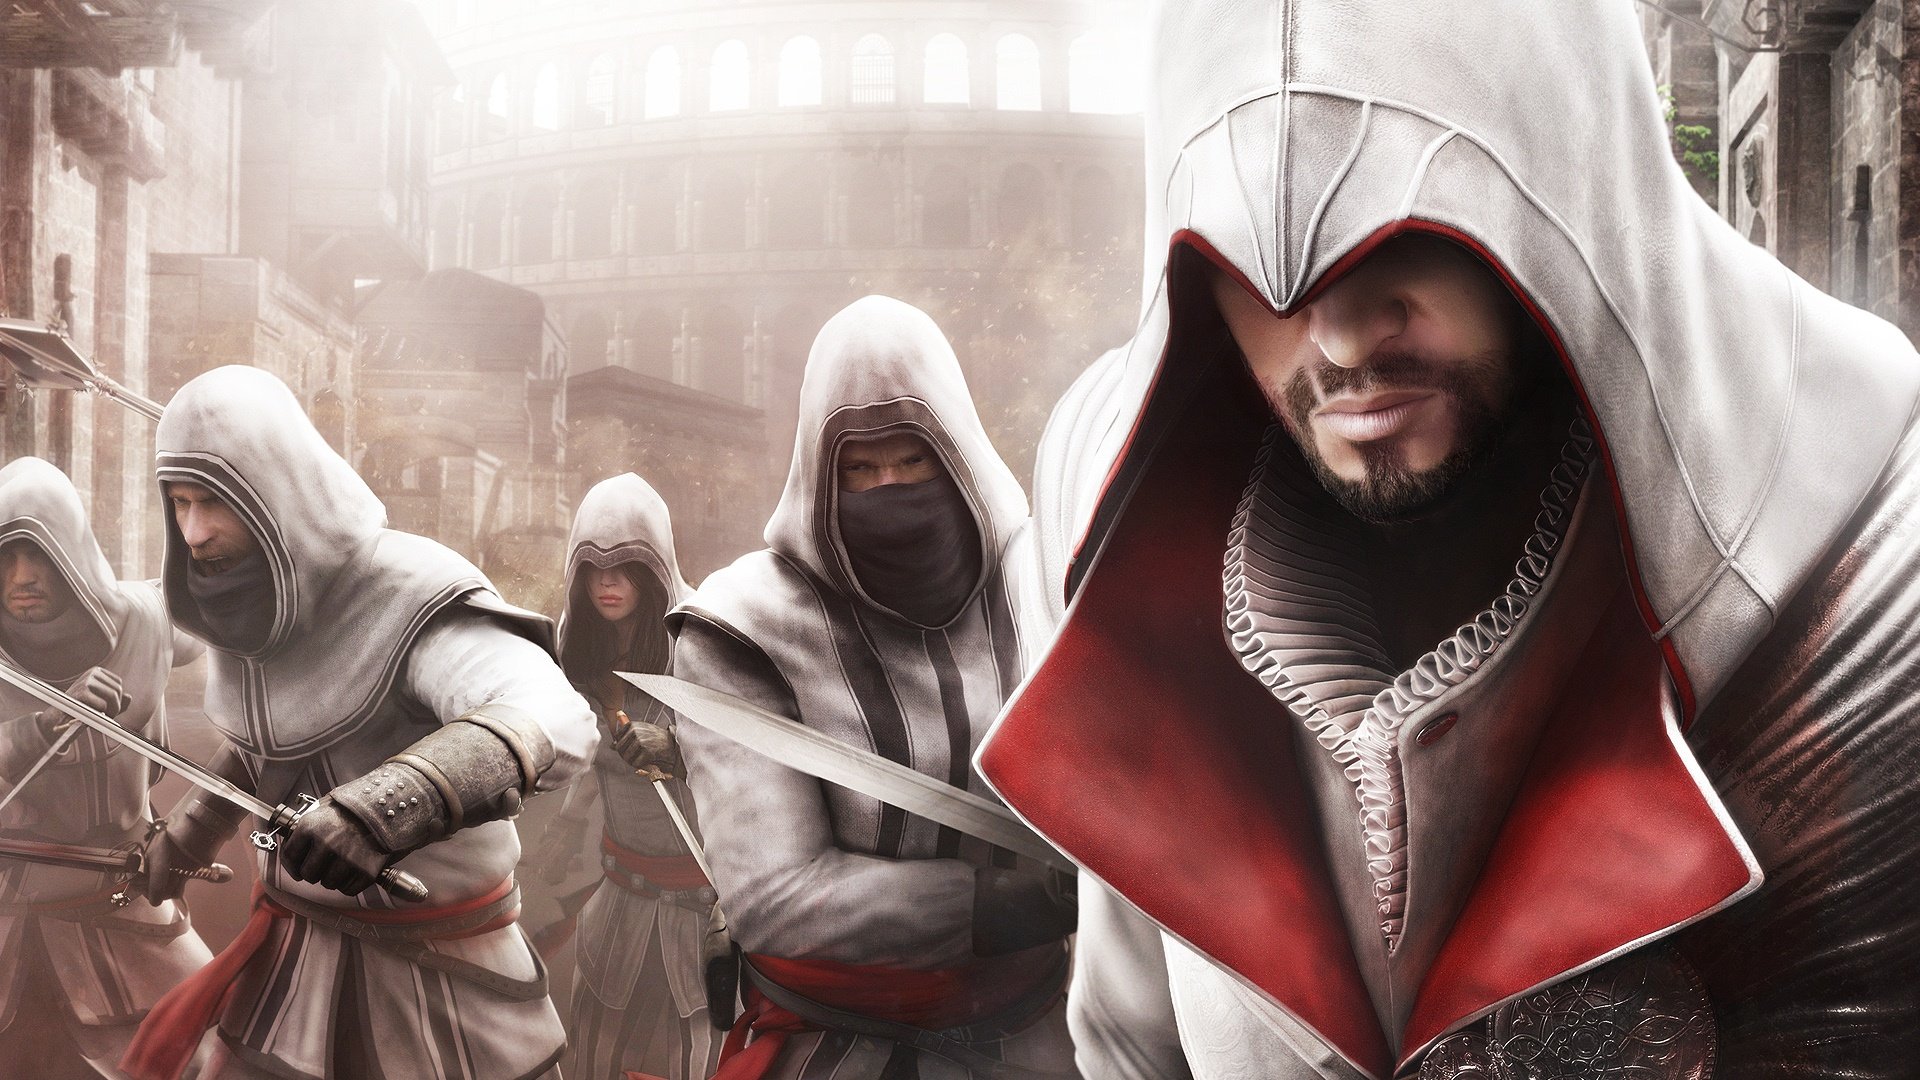 Assassin's Creed Эцио. Assassin's Creed 2 Brotherhood. Ассасин Крид 2 Эцио. Ассасин Крид братство крови Эцио.